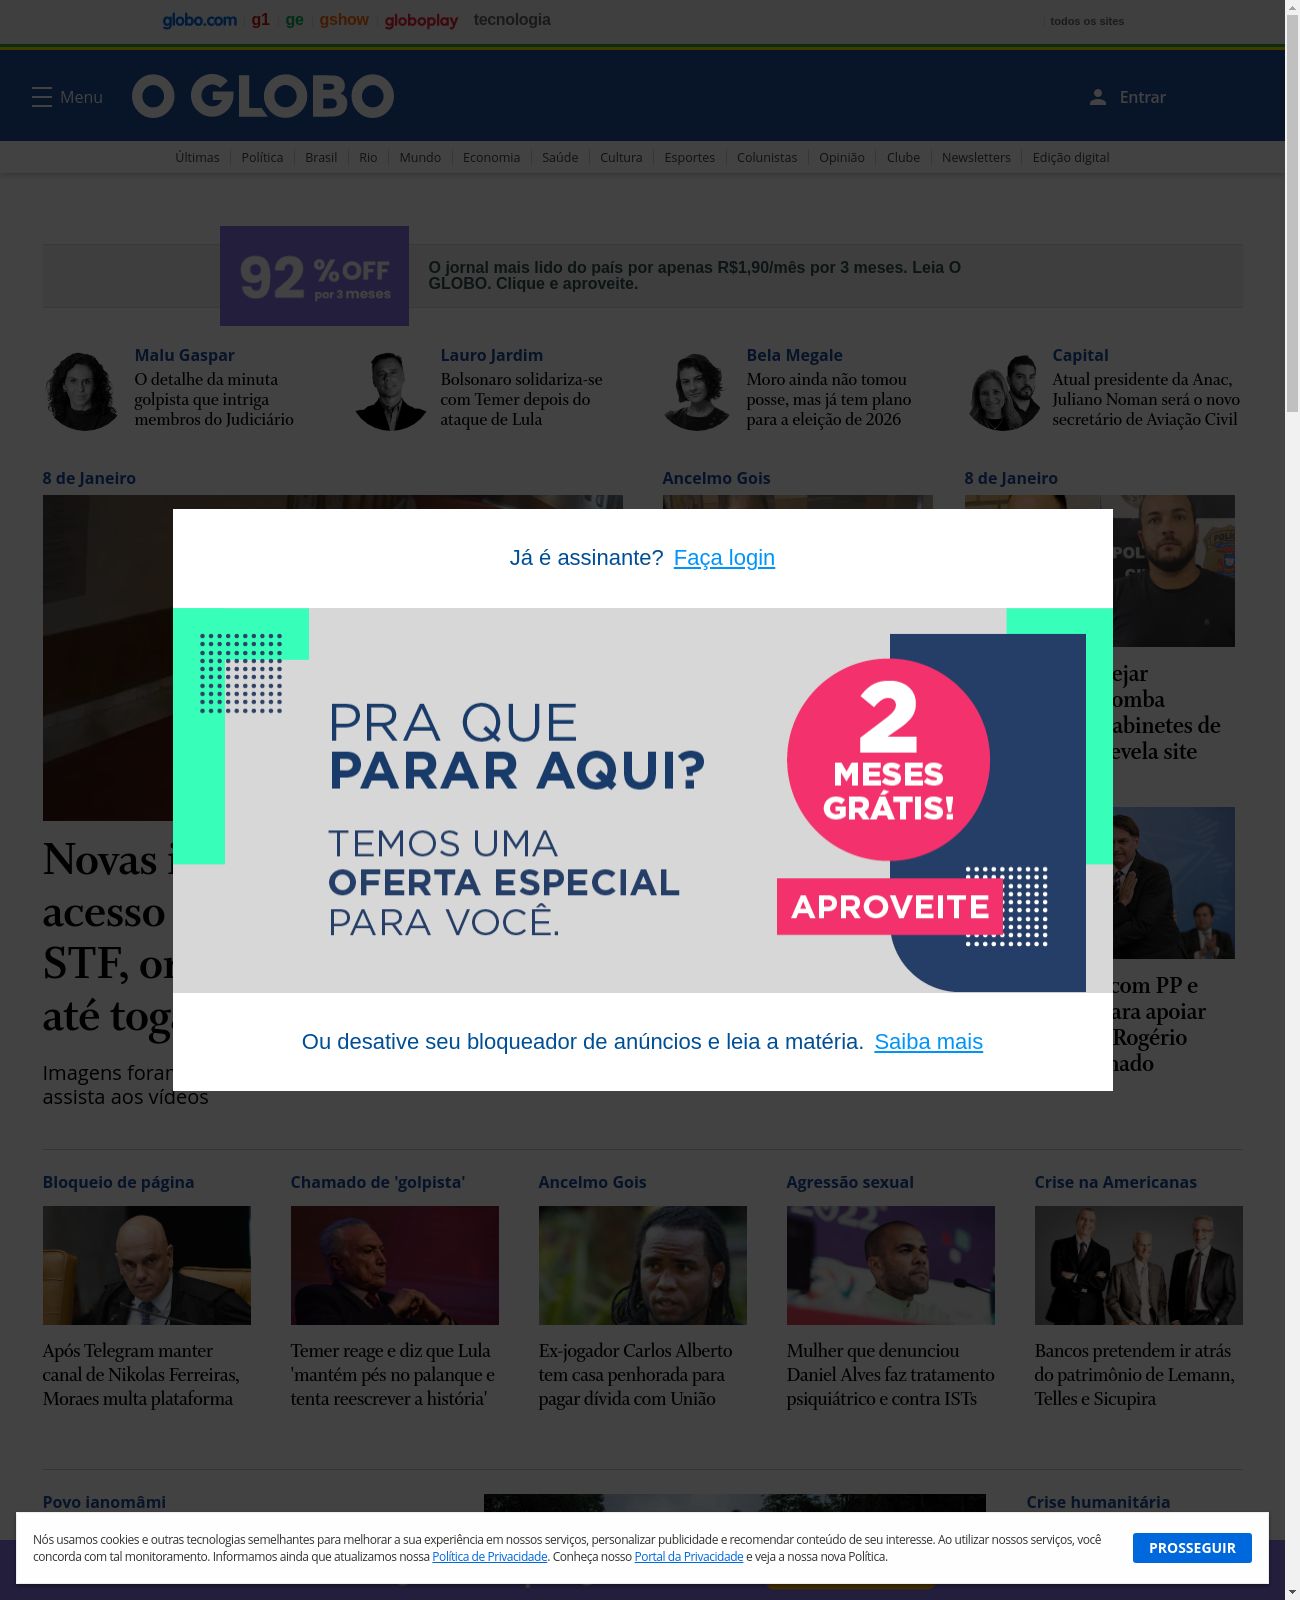 O Globo at 2023-01-25 23:11:47-03:00 local time